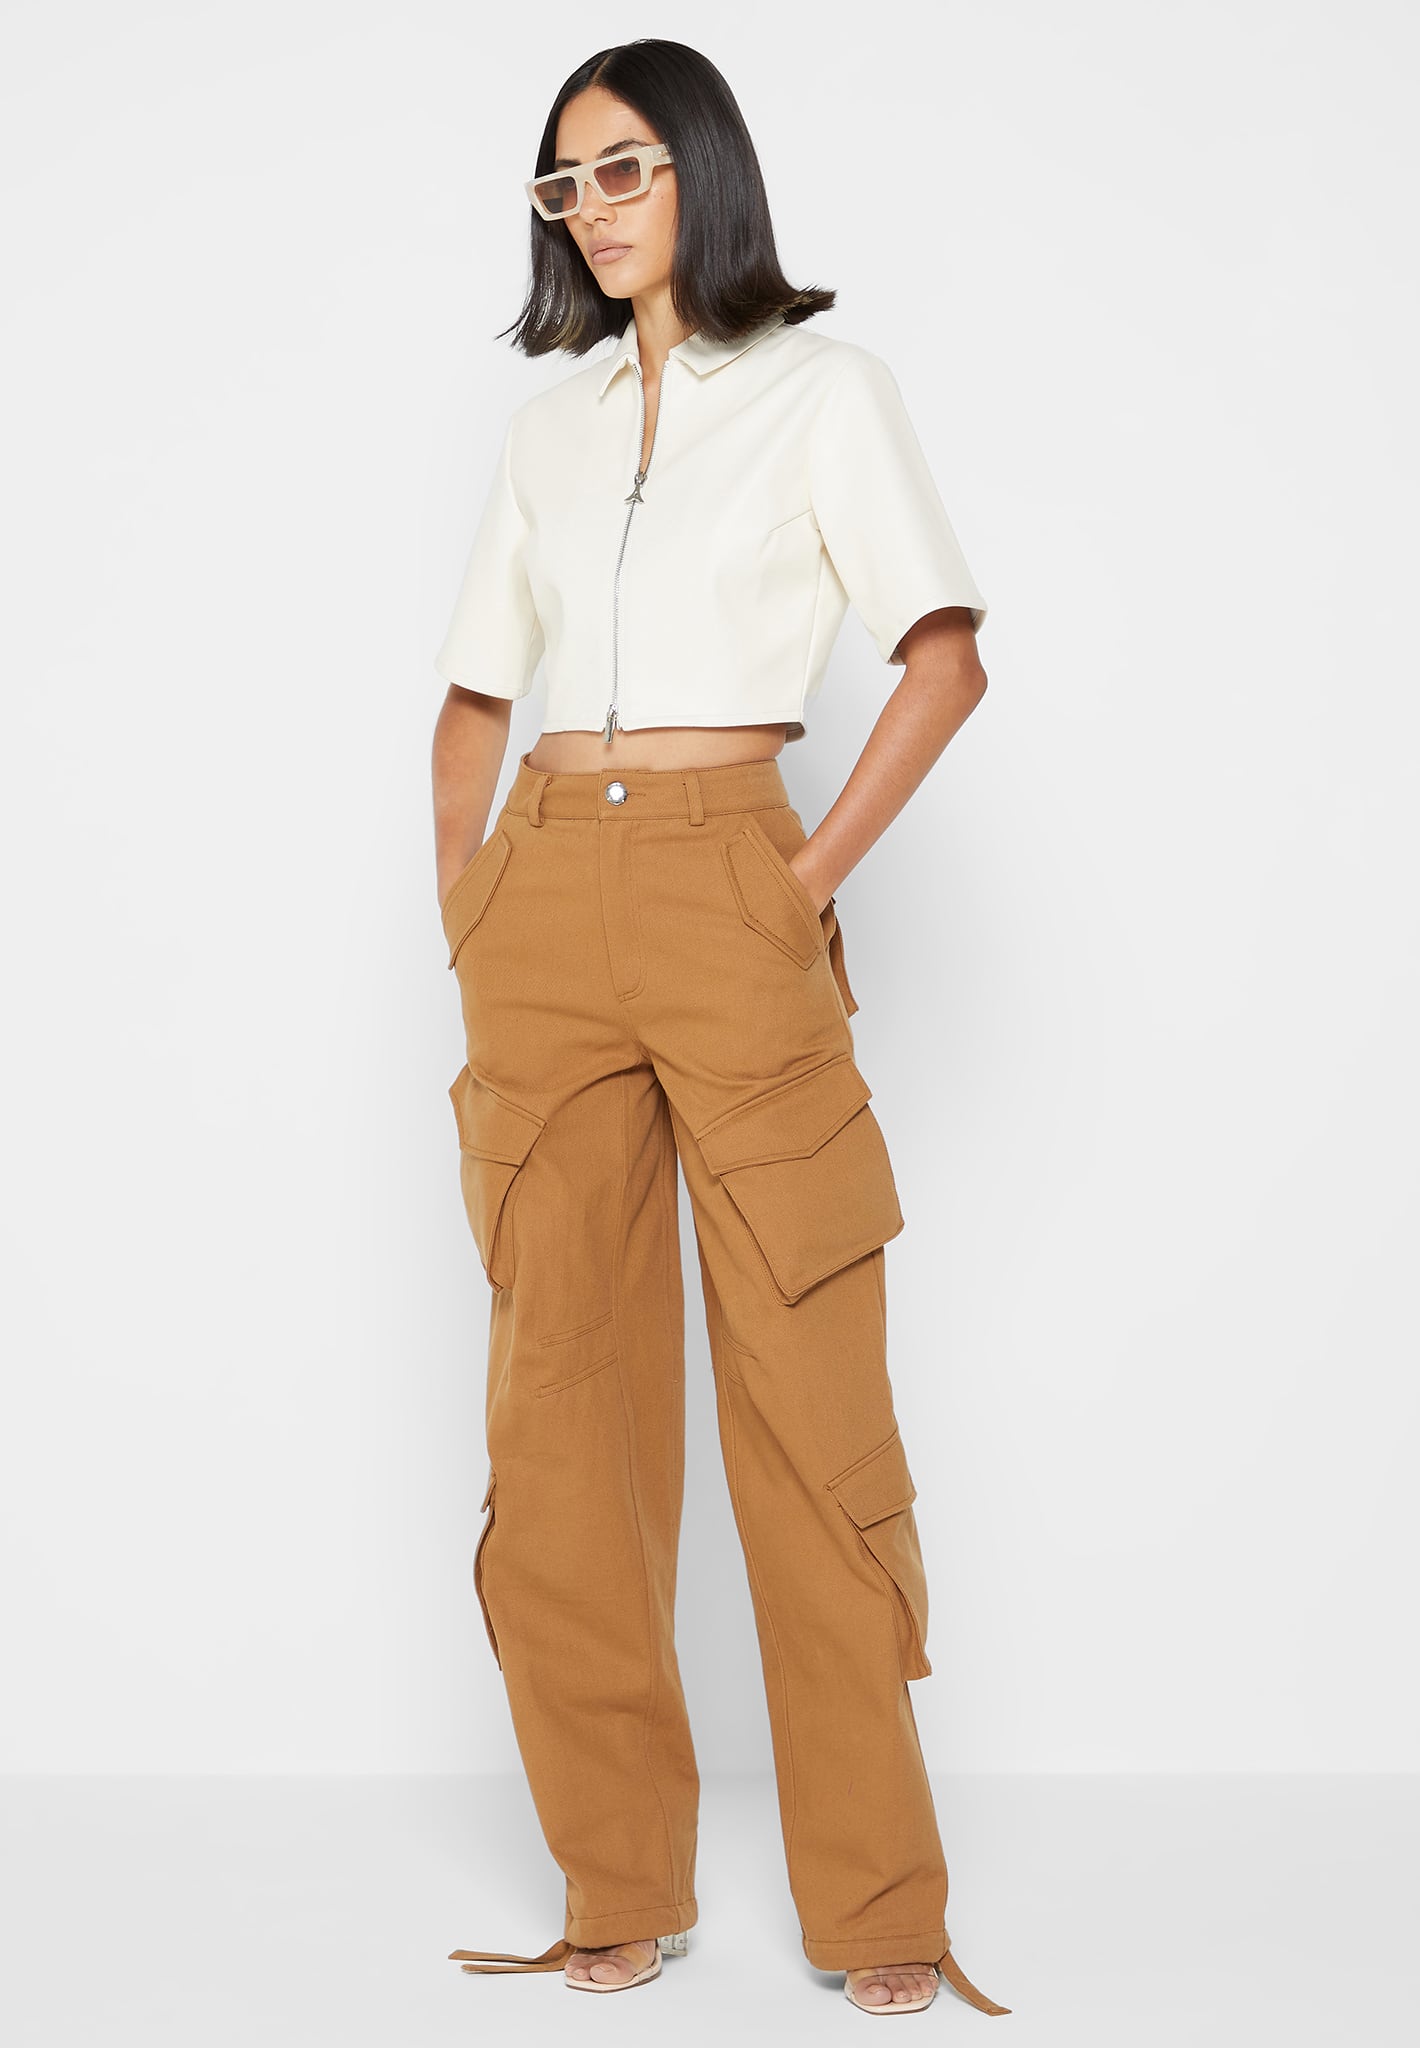 Zipper Pocket Women's Pants High Waist Without Belt Skinny Cargo Women Pant  2021 Summer Autumn Fashion Casual Trousers Female